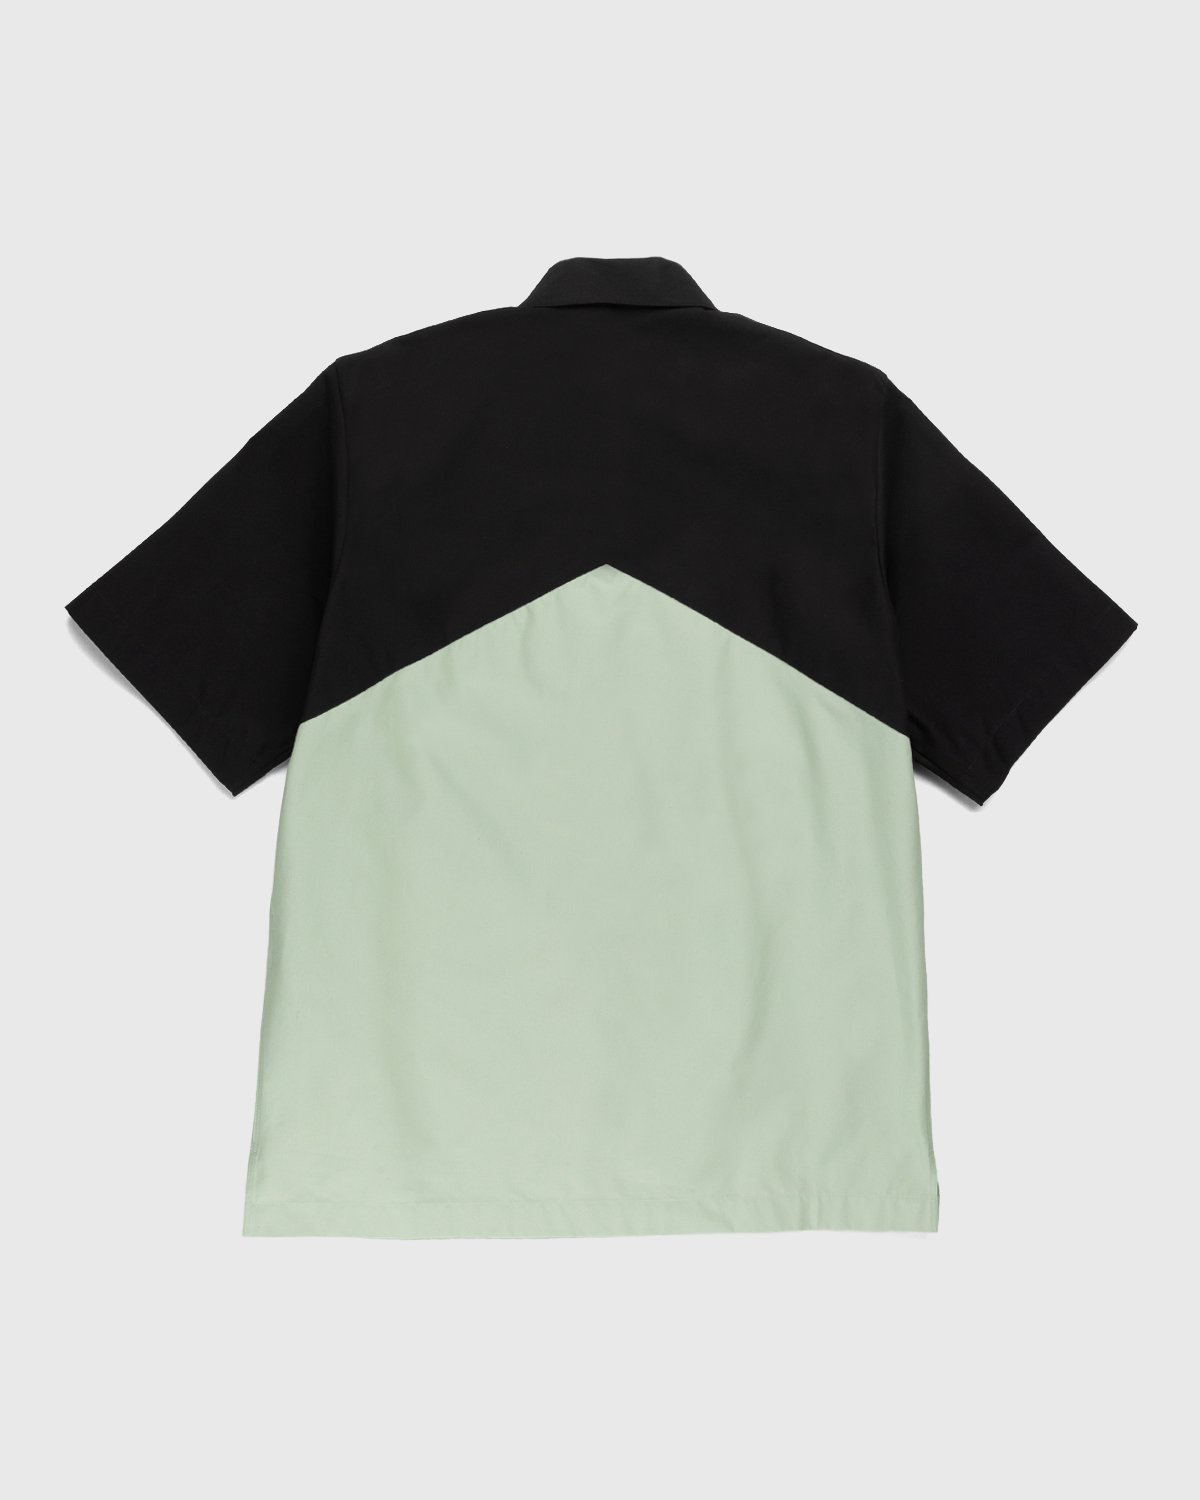 Jil Sander - Two-Tone Diagonal Cut Shirt Black/Green - Clothing - Green - Image 2